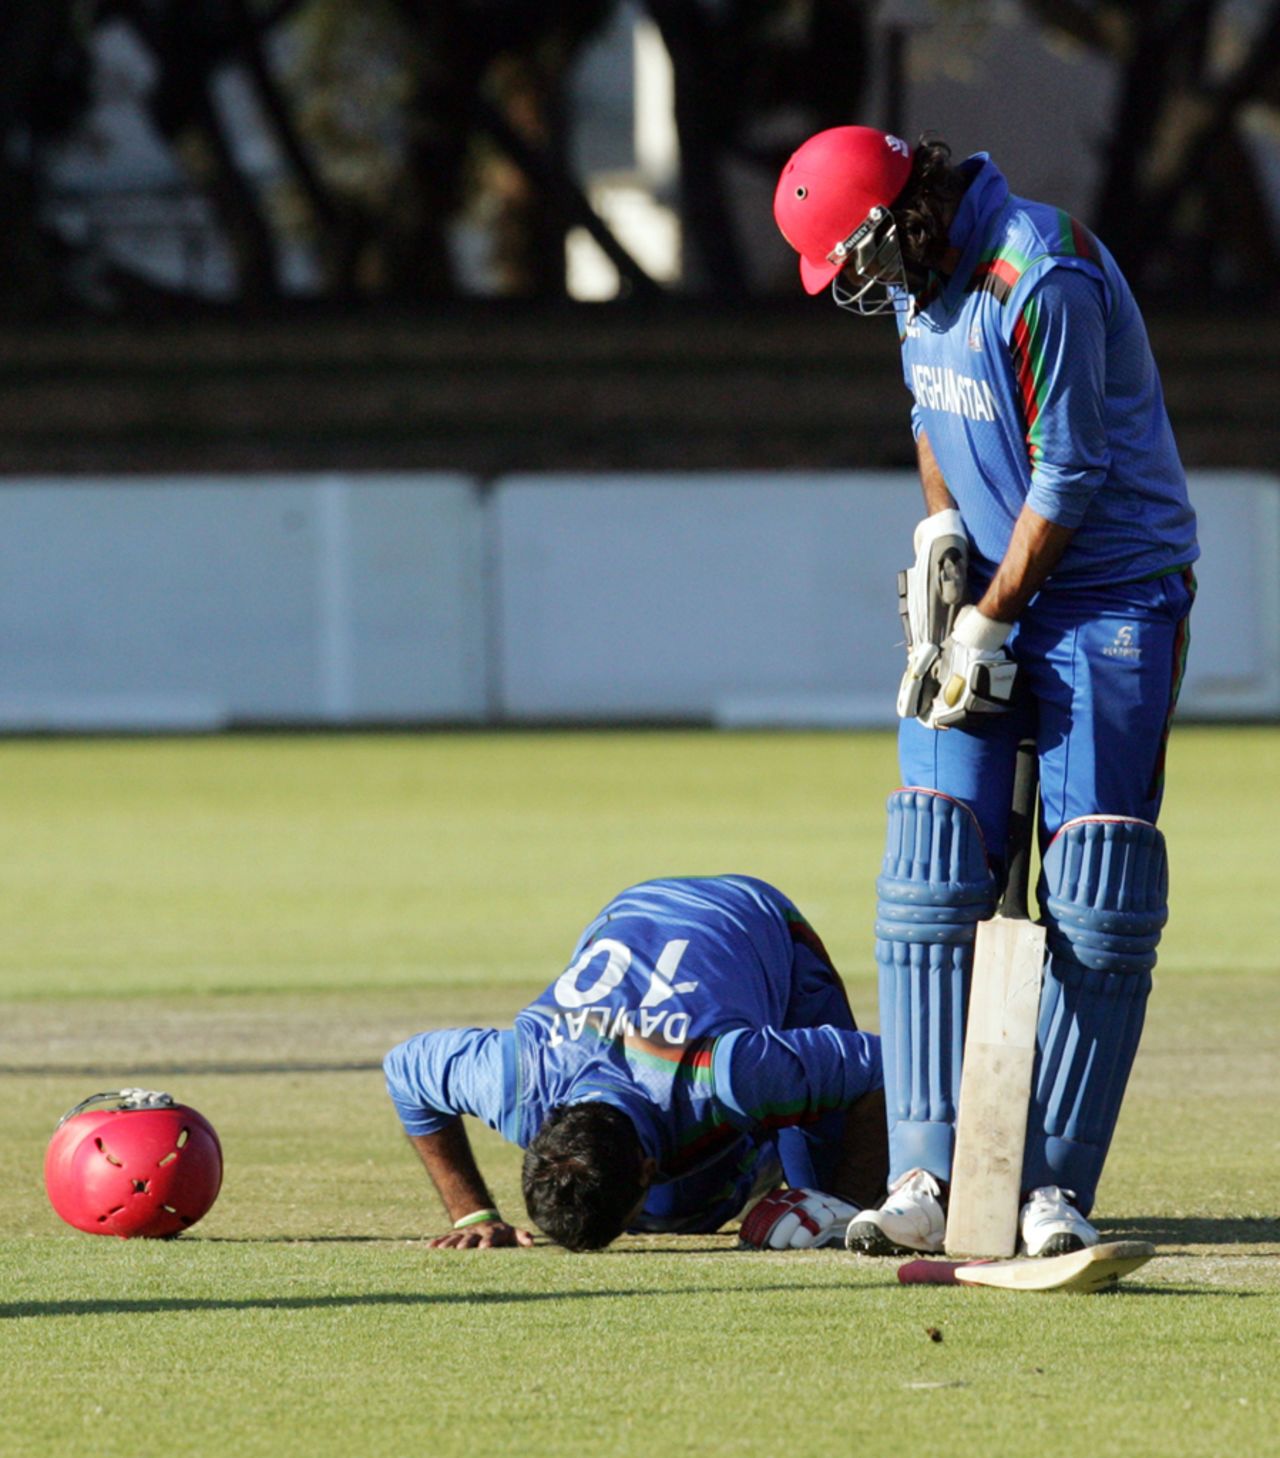 Dawlat Zadran is a relieved man after hitting the winning six, Zimbabwe v Afghanistan, 3rd ODI, Bulawayo, July 22, 2014